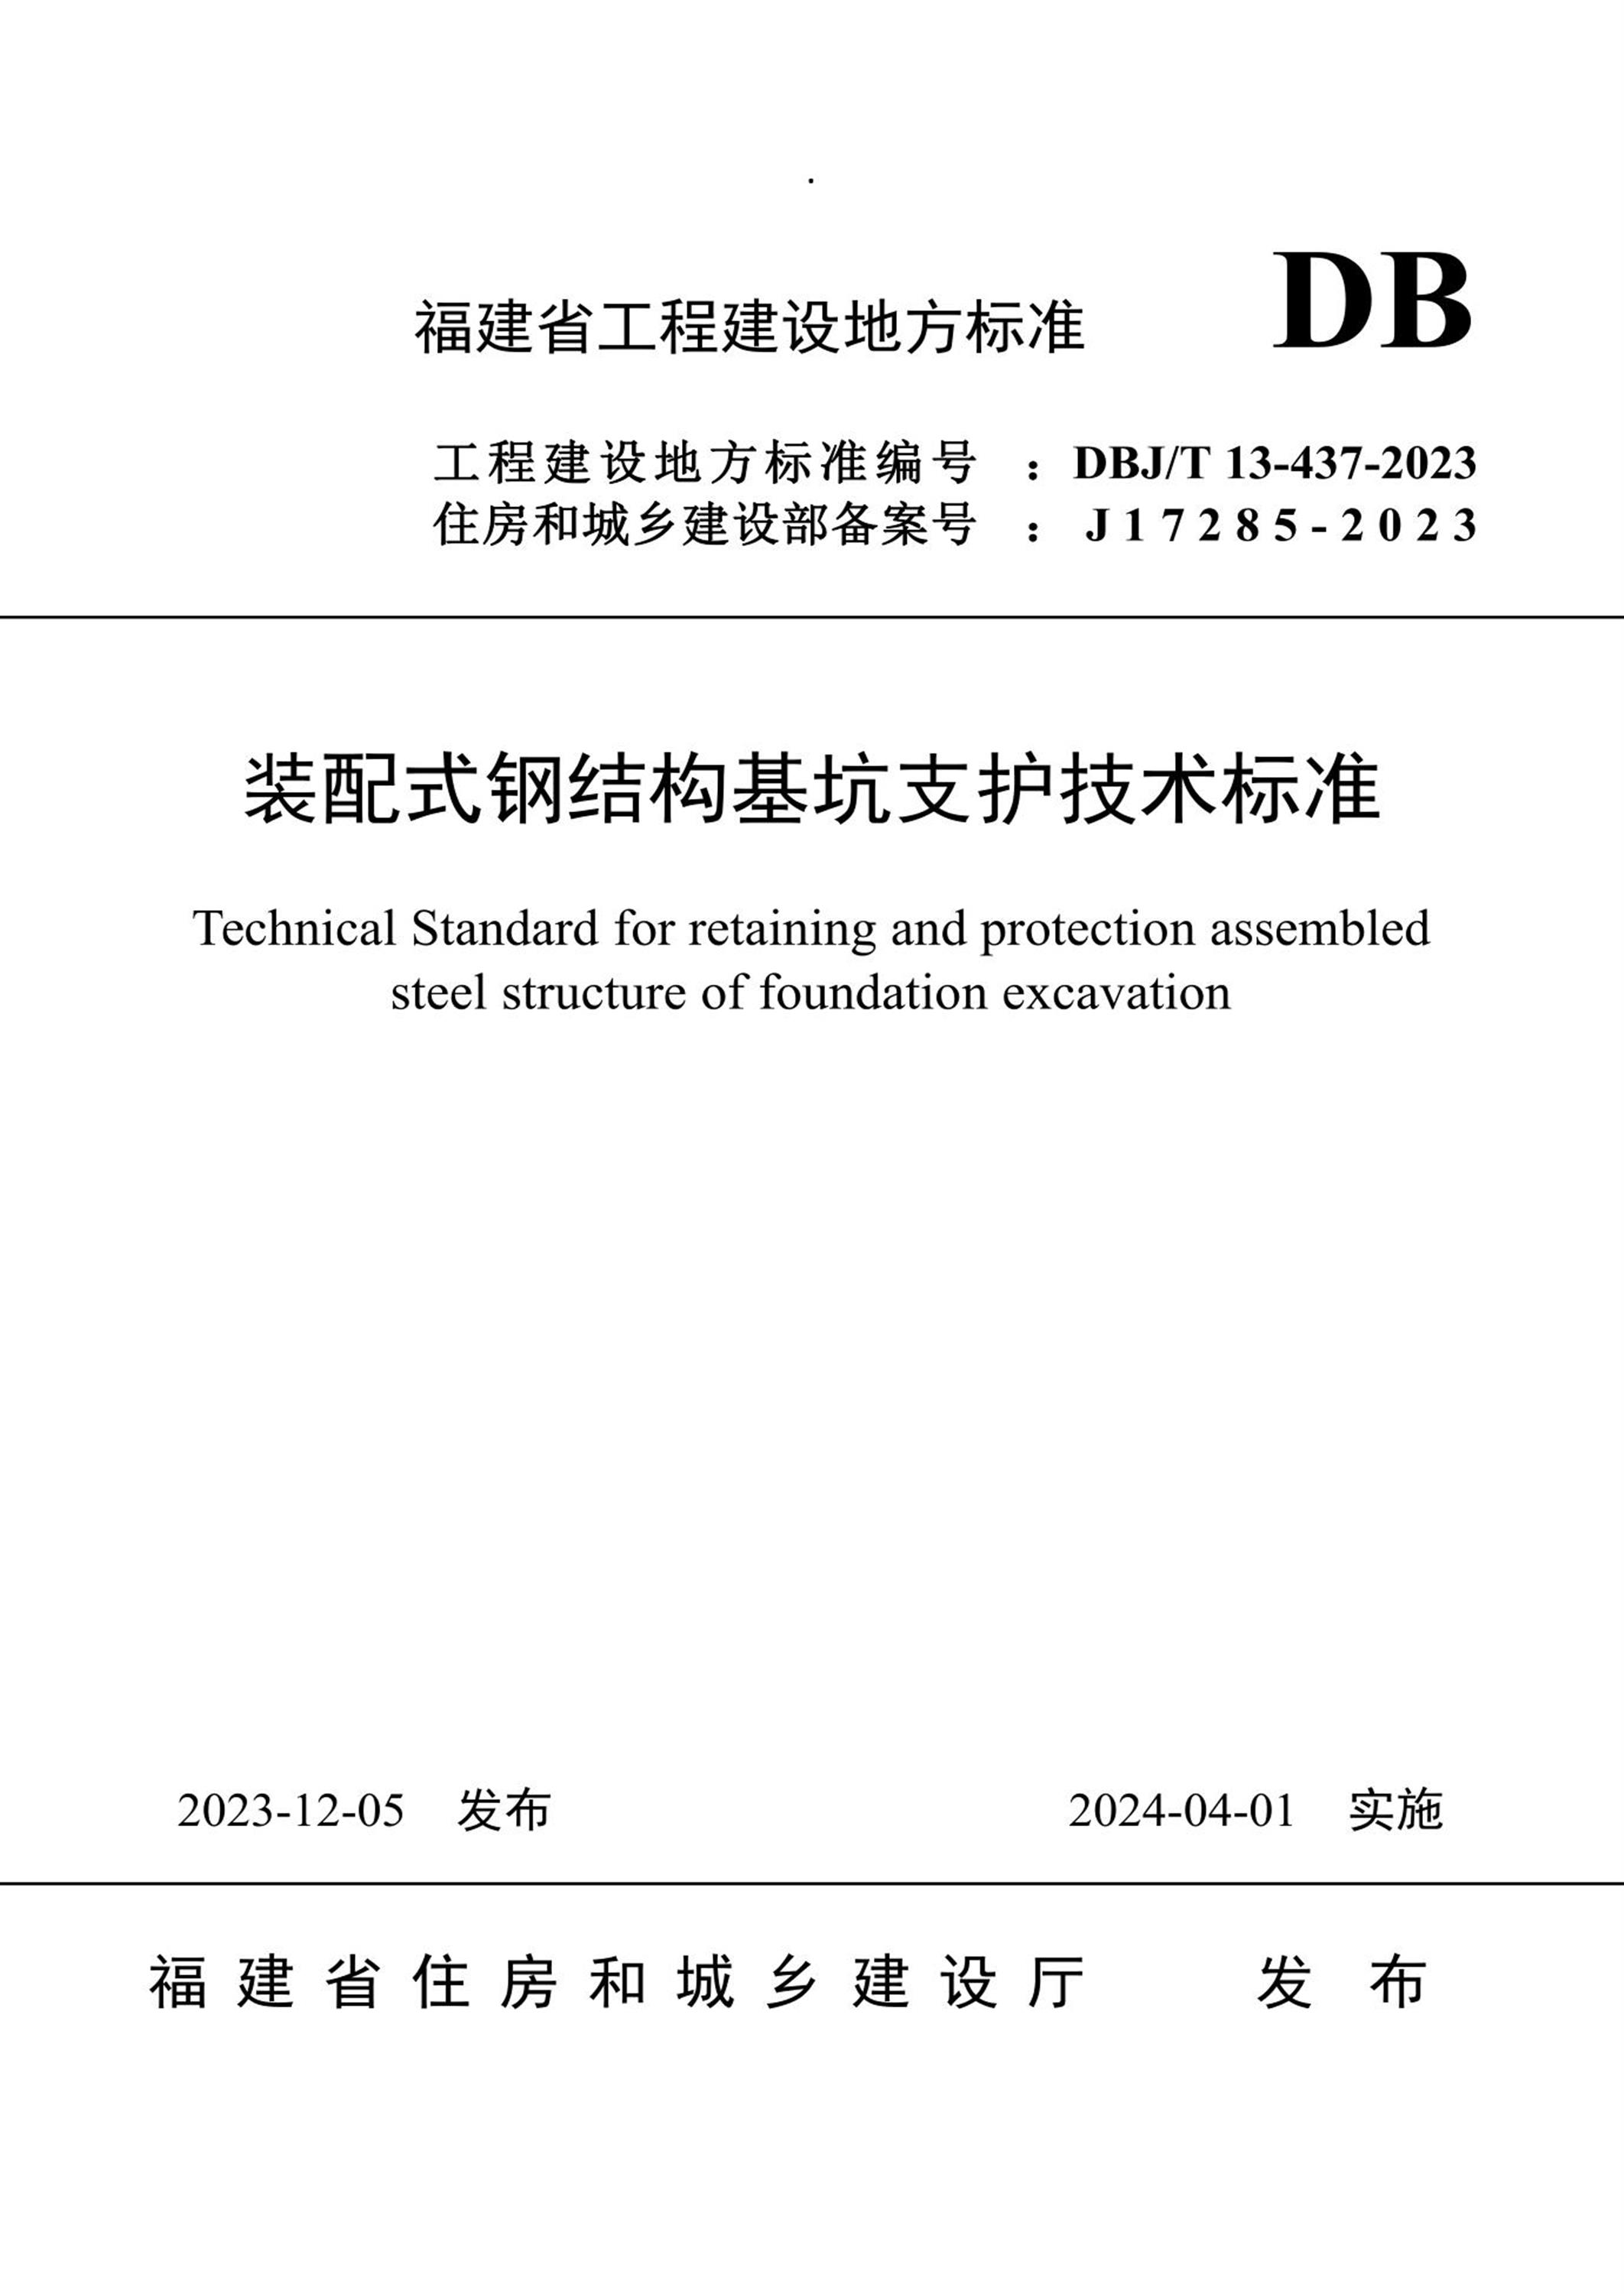 DBJ/T 13-437-2023 装配式钢结构基坑支护技术标准